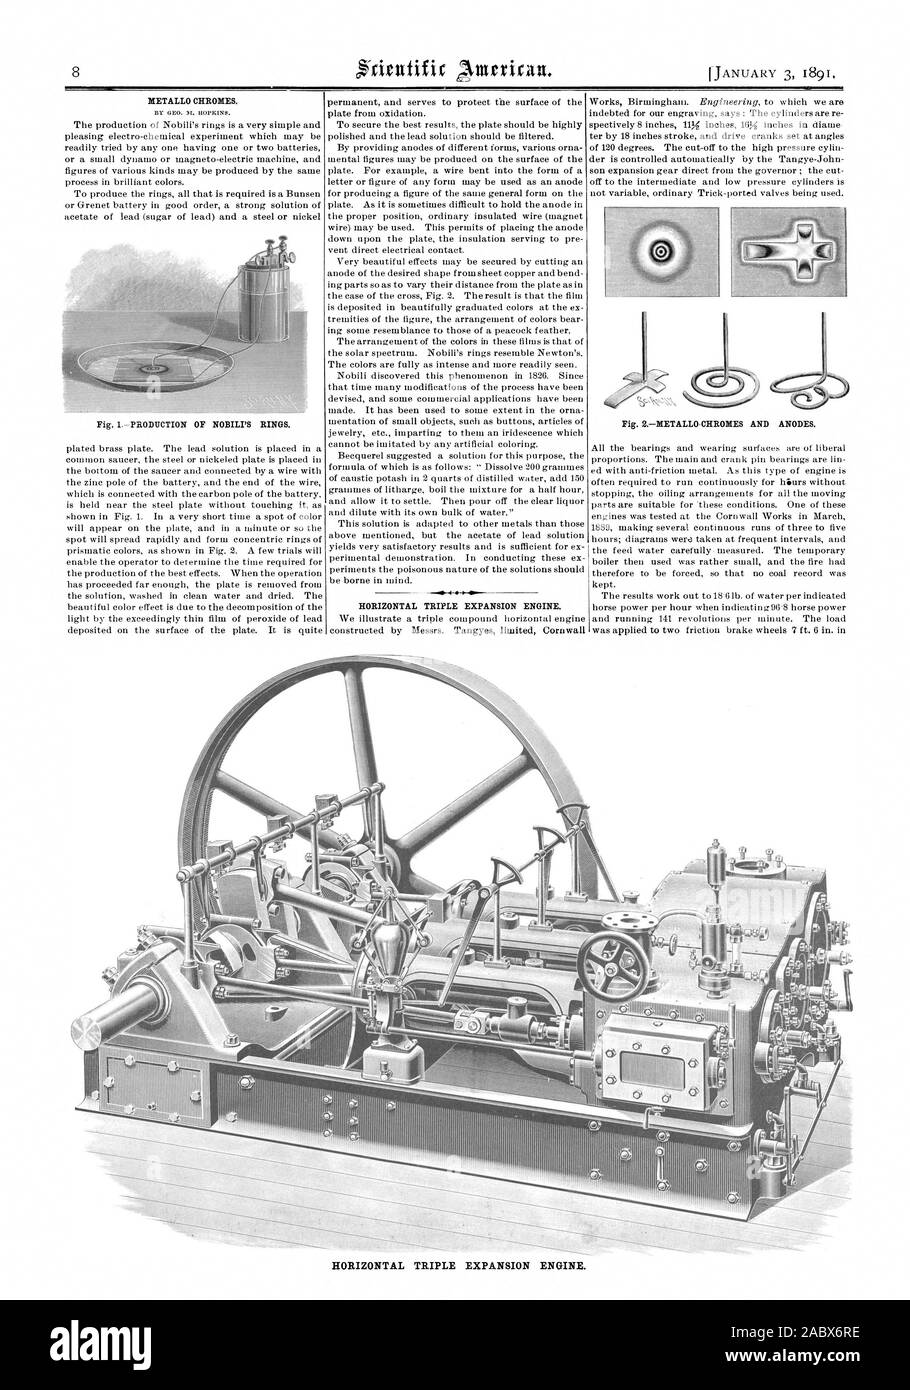 HORIZONTAL TRIPLE EXPANSION ENGINE., scientific american, 1891-01-03 Stock Photo